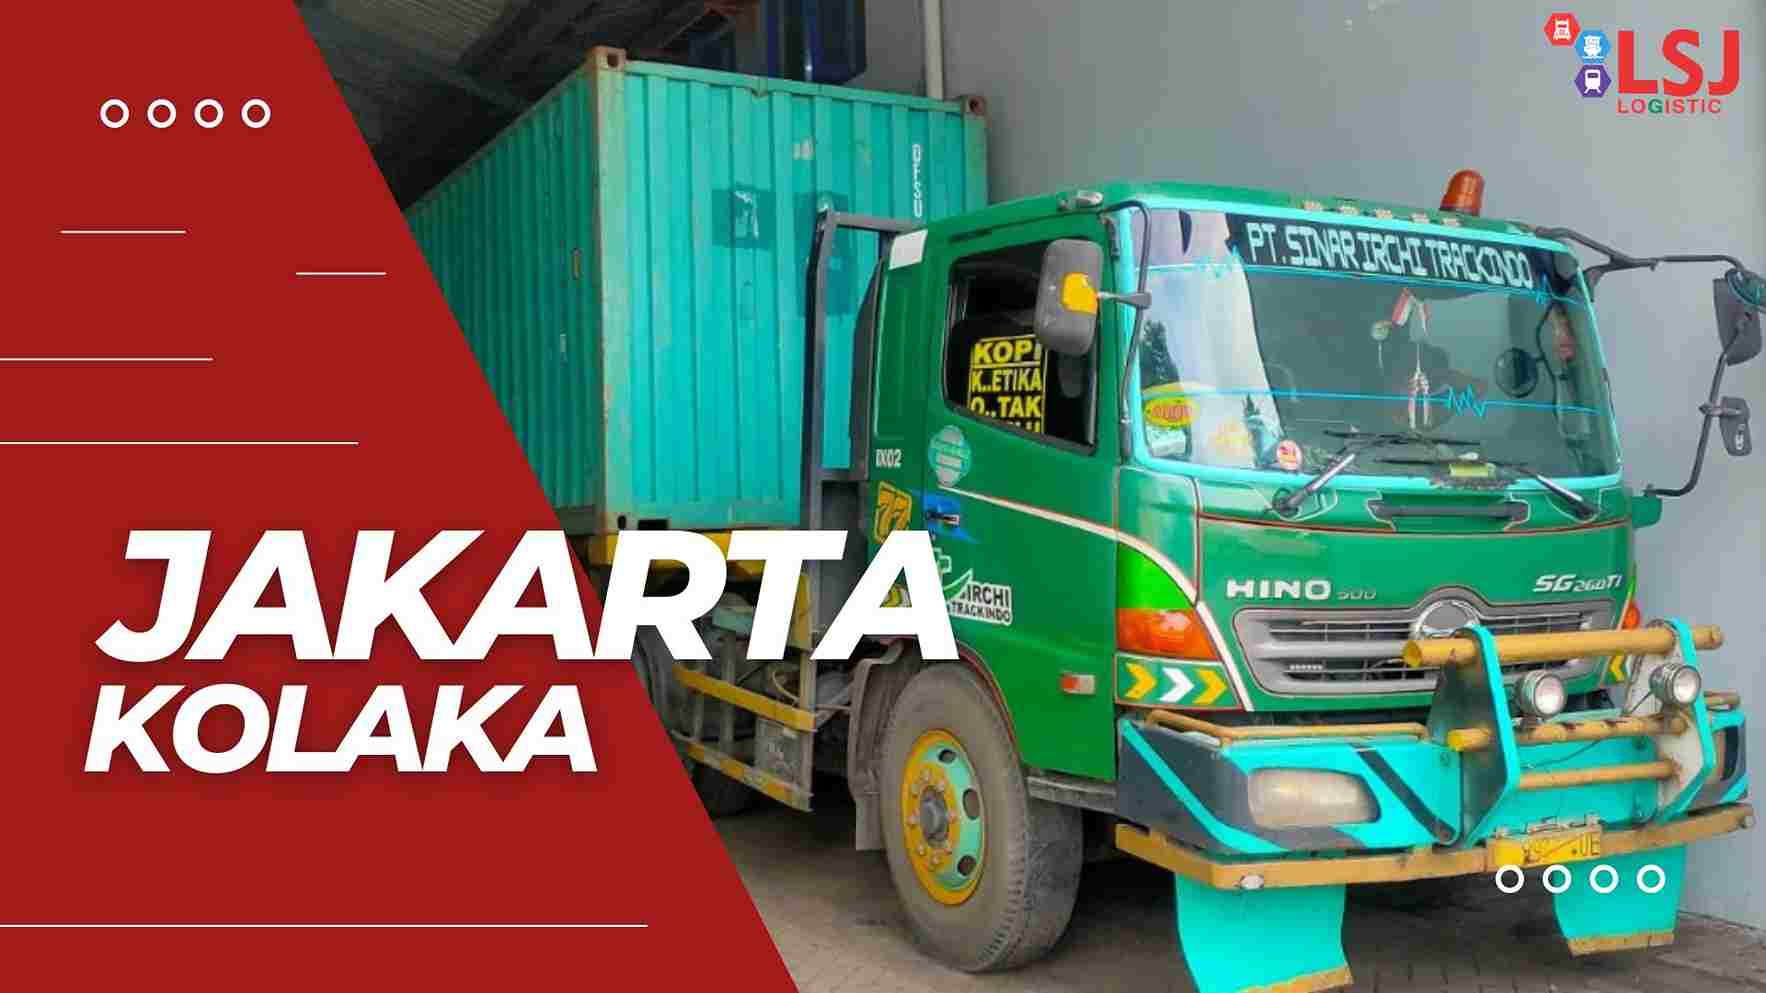 Harga Pengiriman Container Jakarta Kolaka